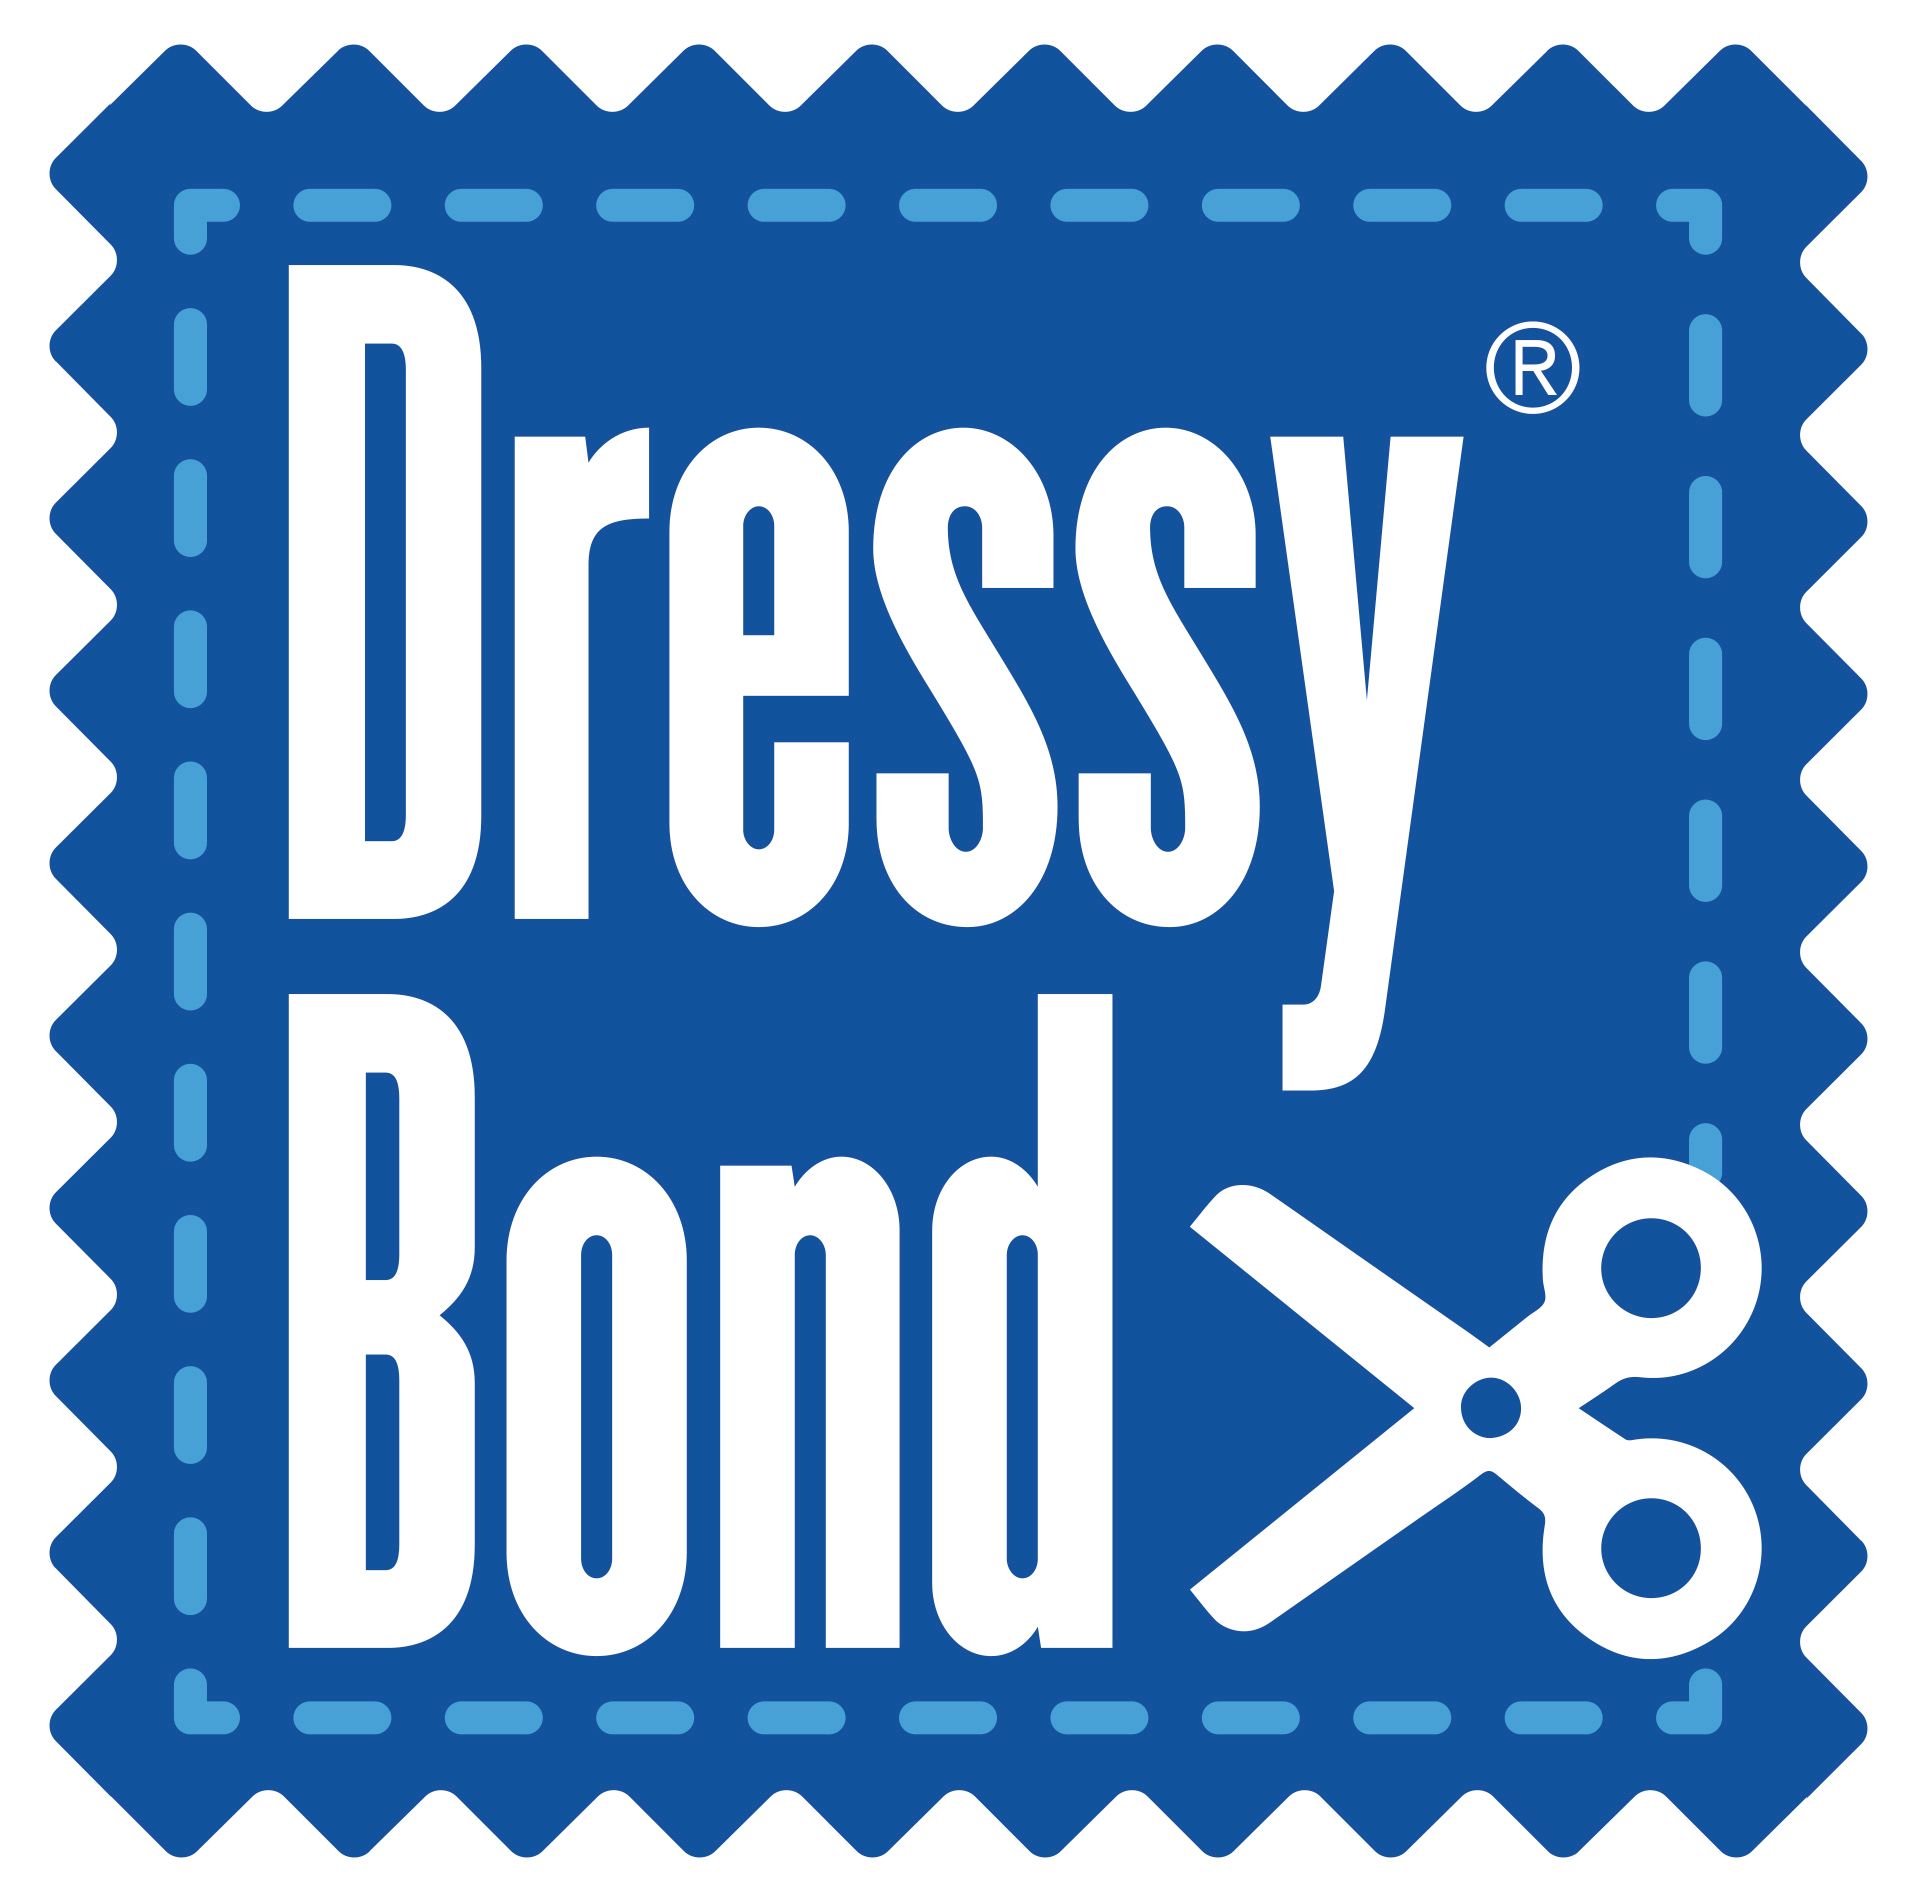 014878 Dressy Bond